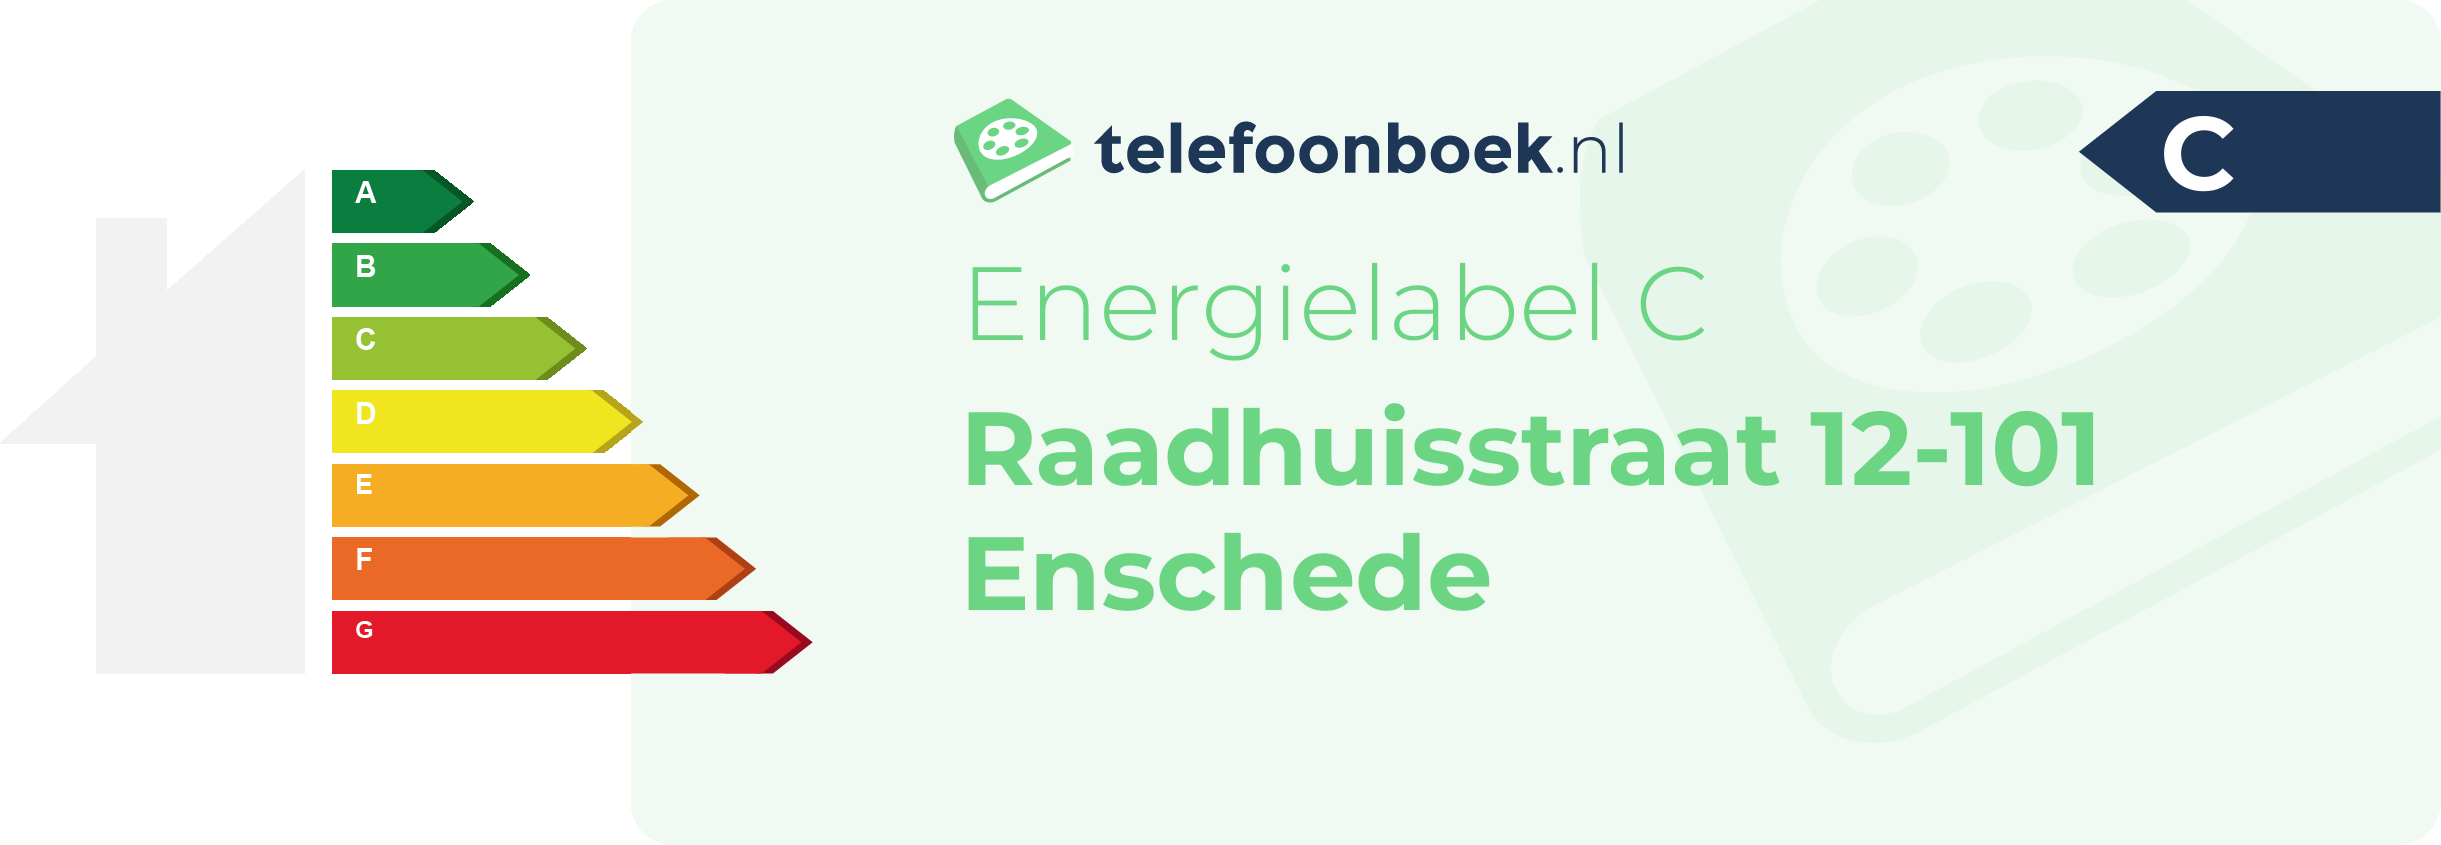 Energielabel Raadhuisstraat 12-101 Enschede